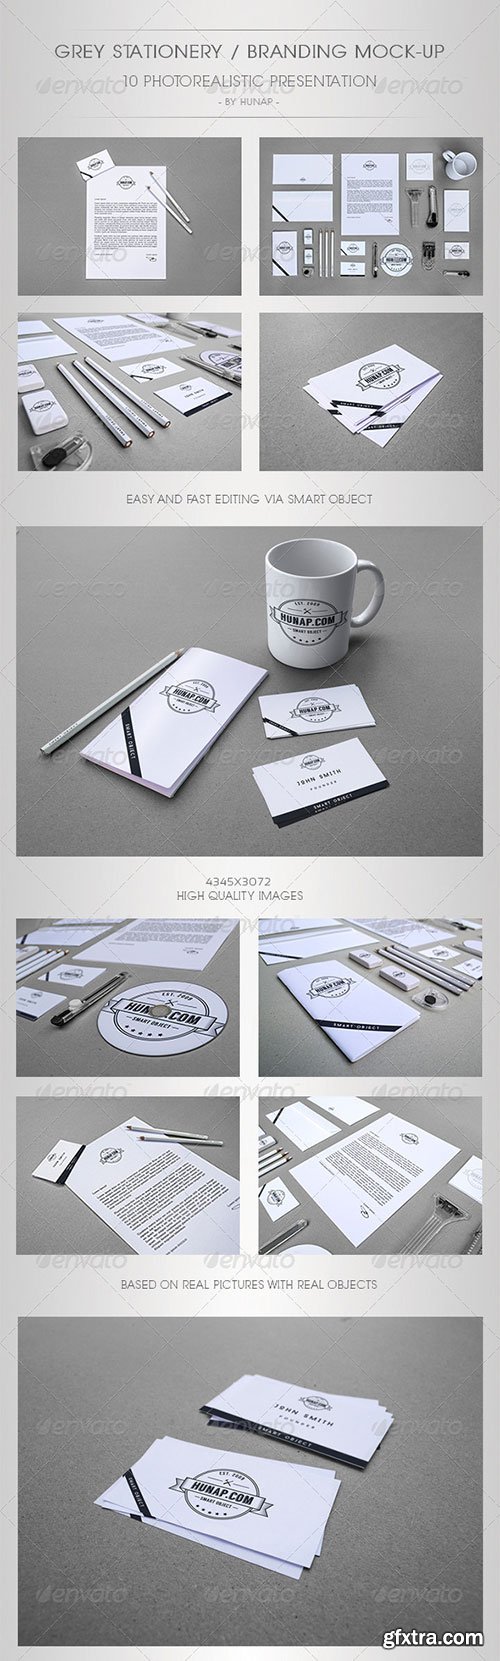 GraphicRiver - Grey Stationery/Branding Mock-Up 5410084